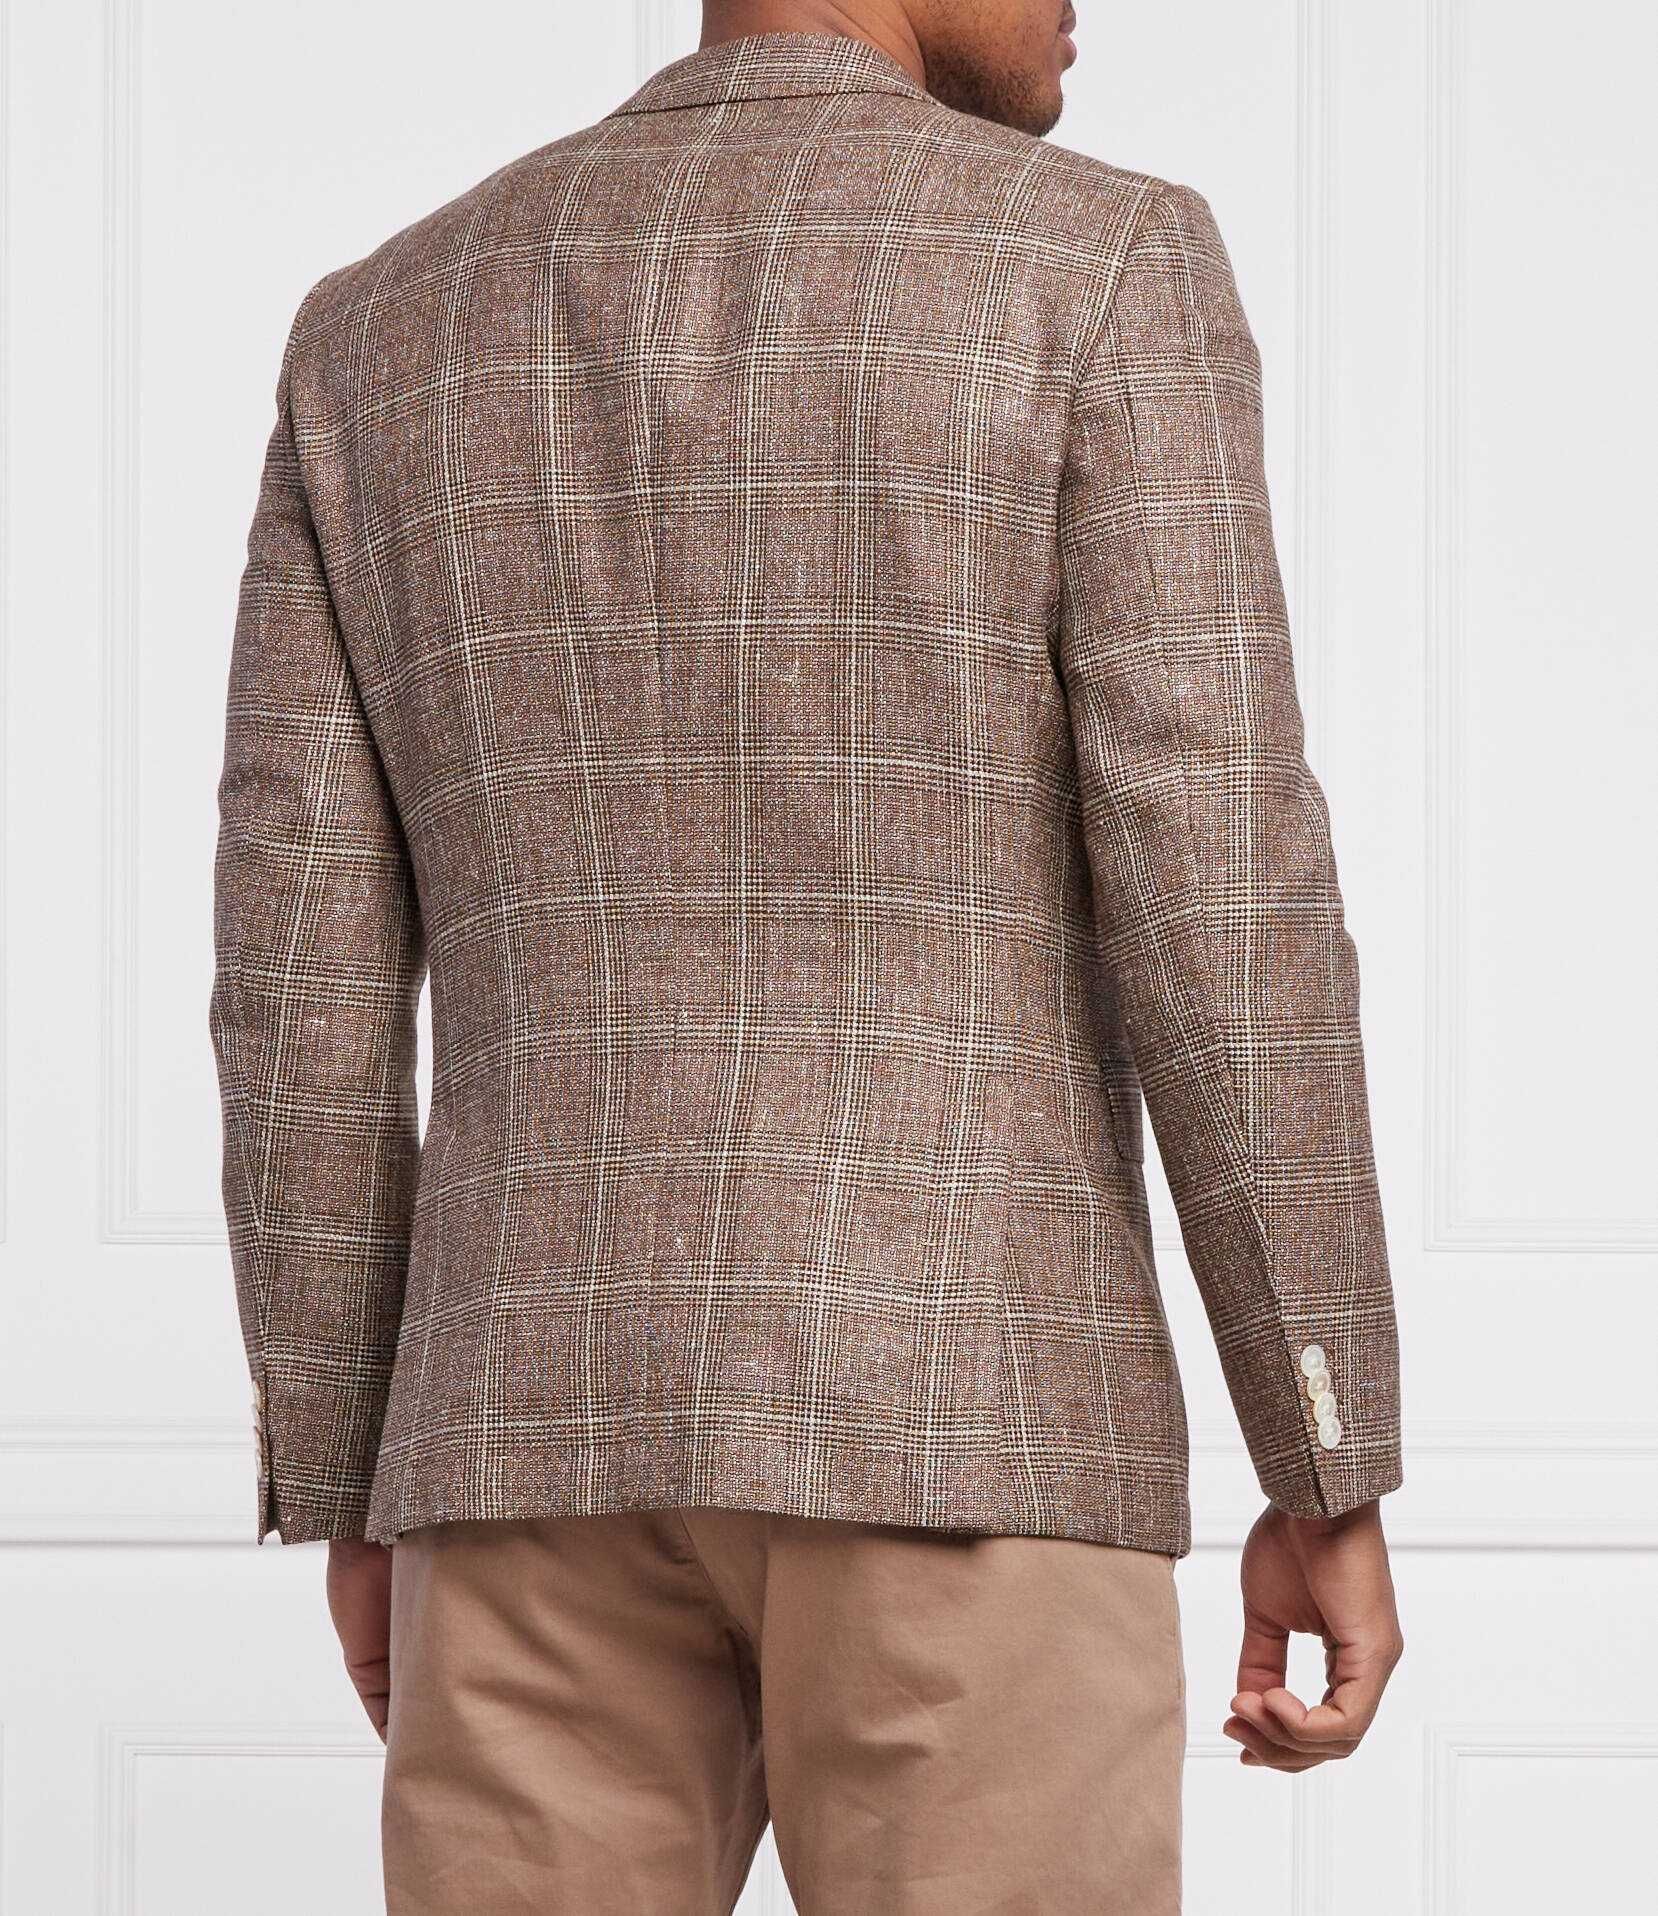 Sacou blazer slim 52 XL de lux Atelier Torino lana super 130's